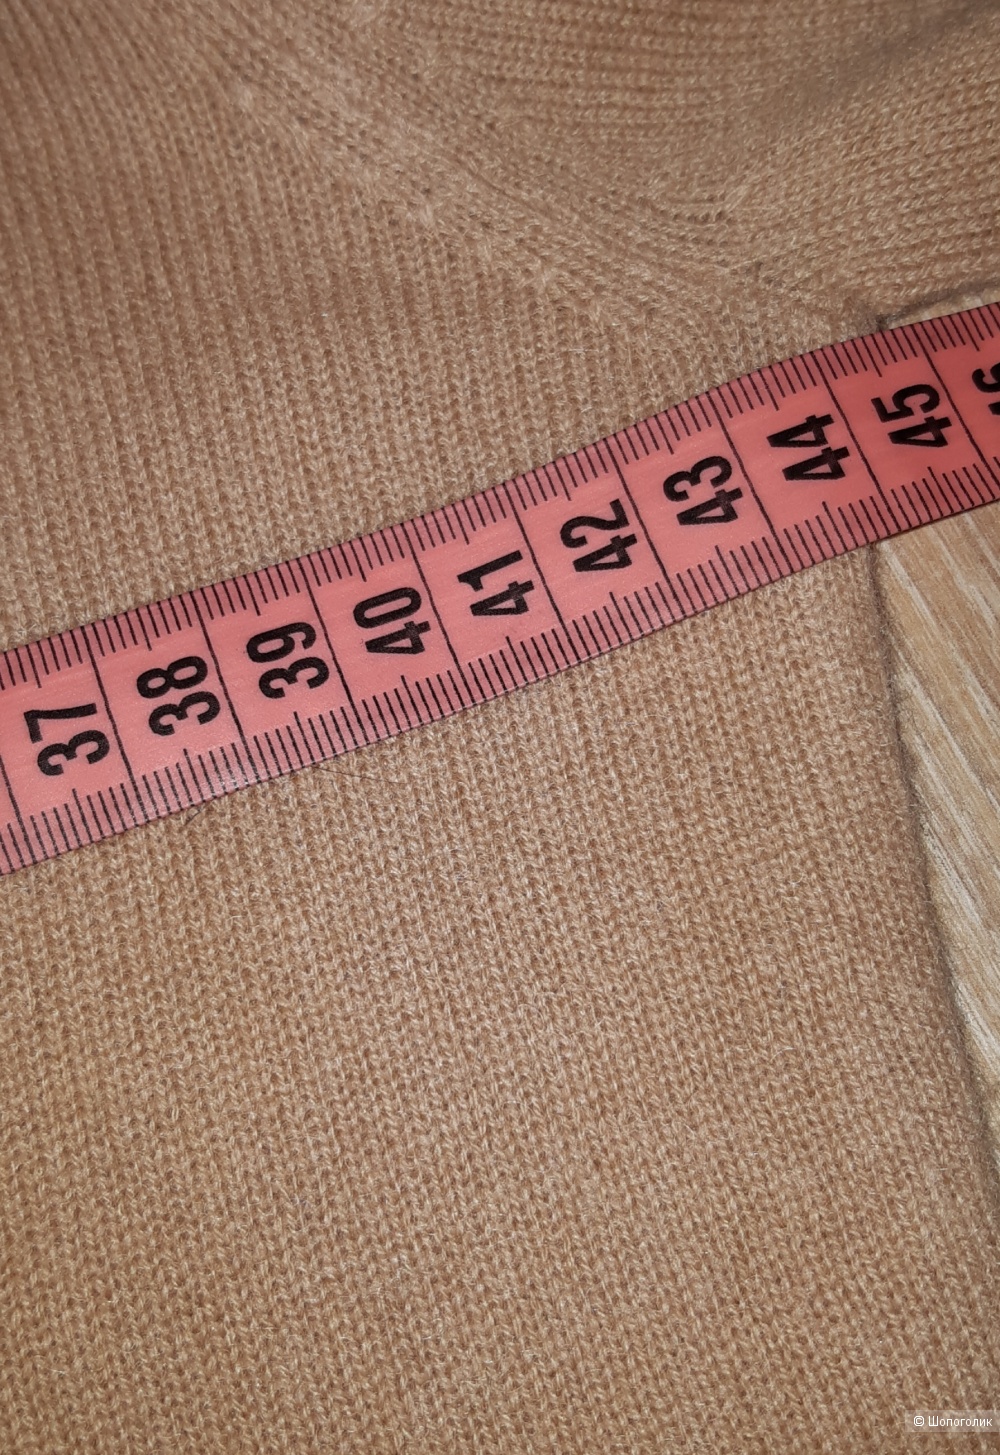 Кашемировый кардиган authentic cashmere, размер xs/s